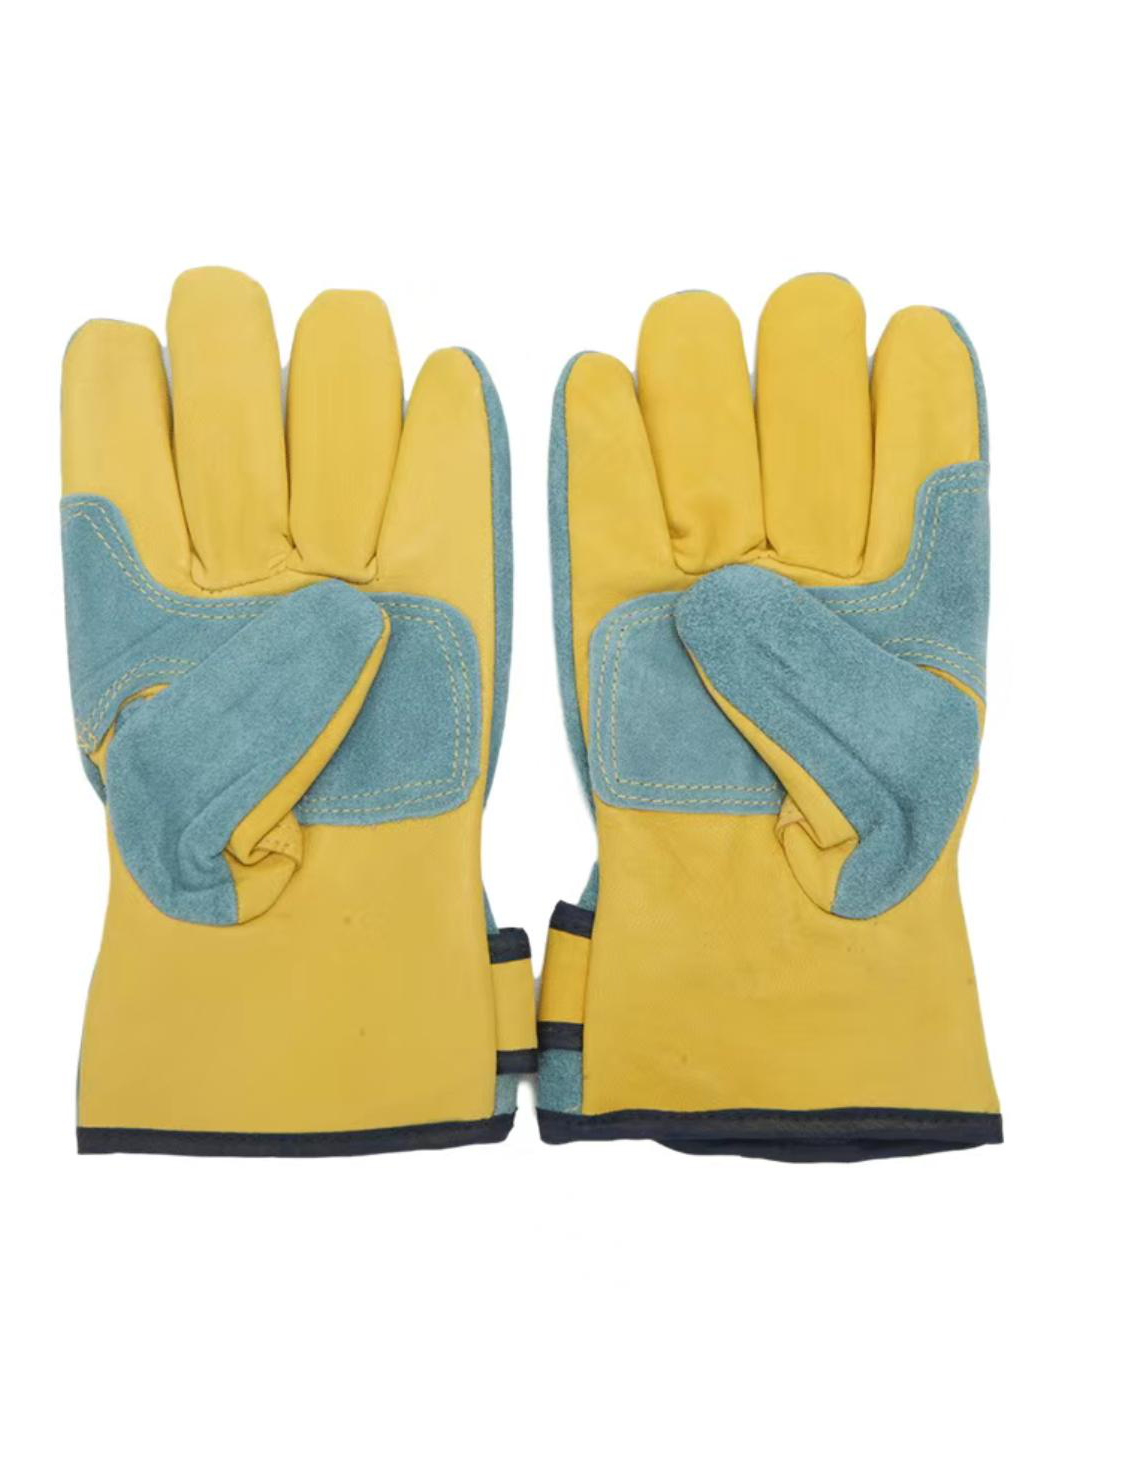 Mechanical safety gloves leather gloves driver gloves 2